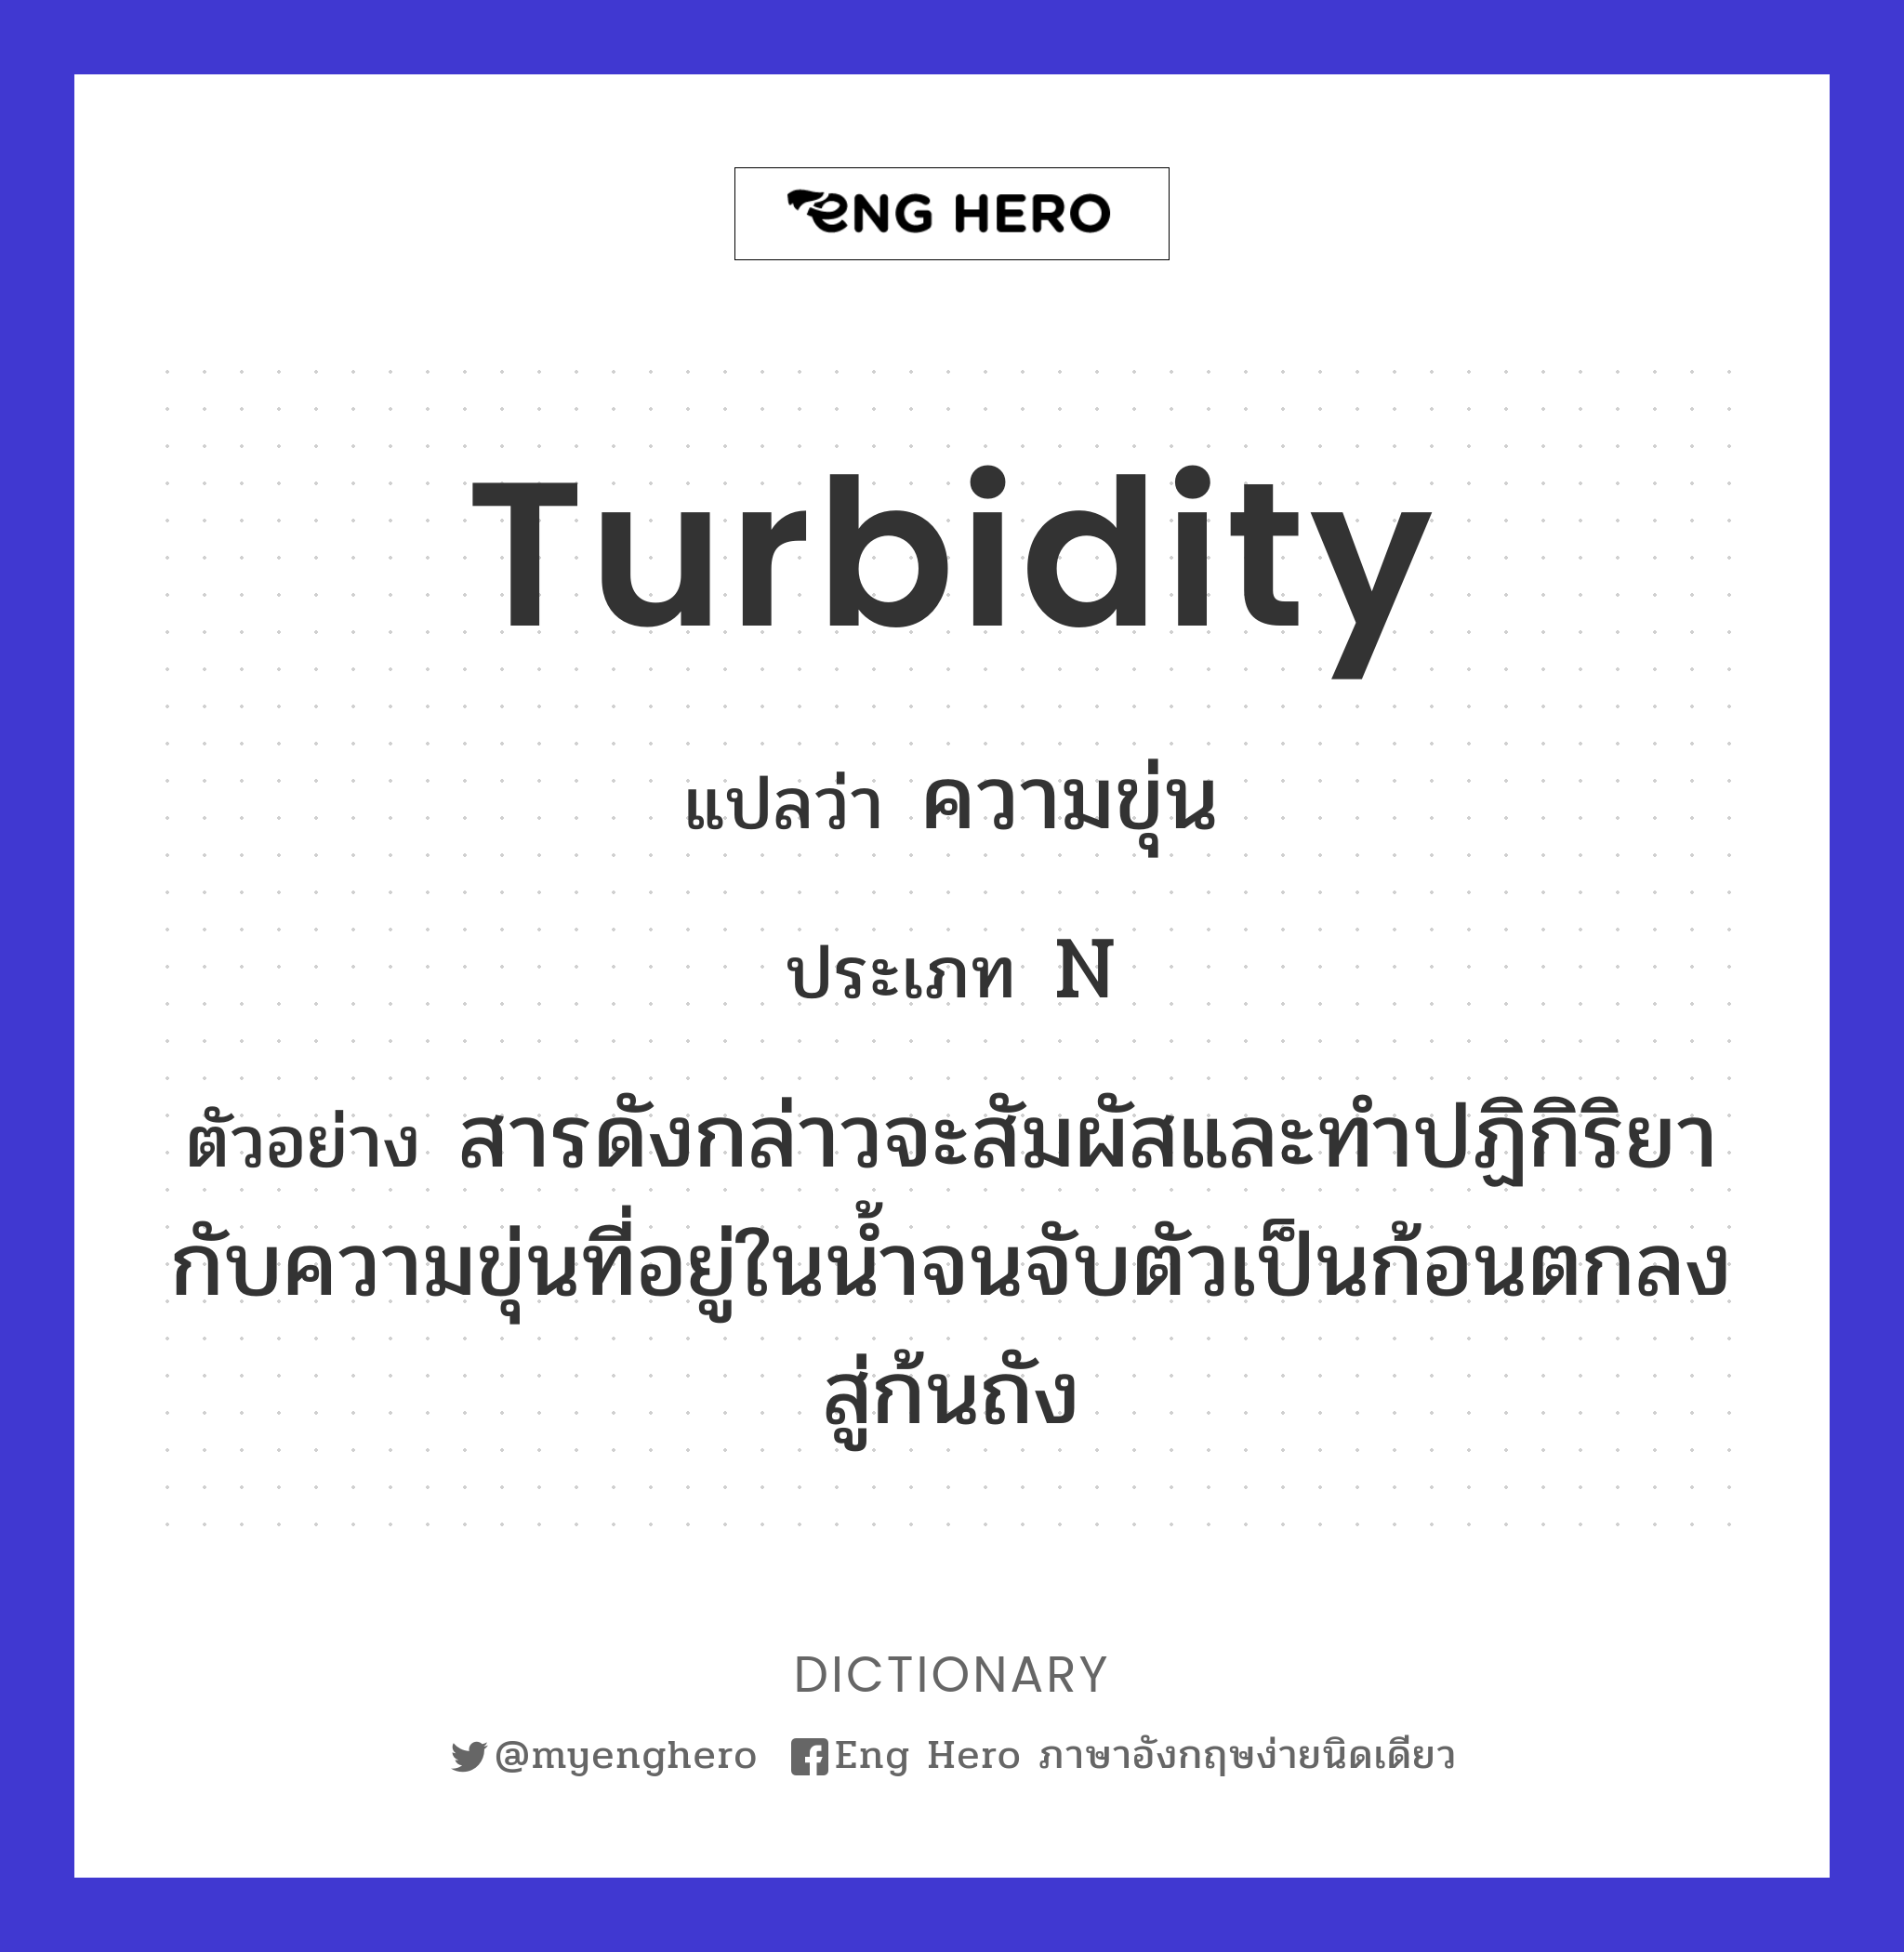 turbidity